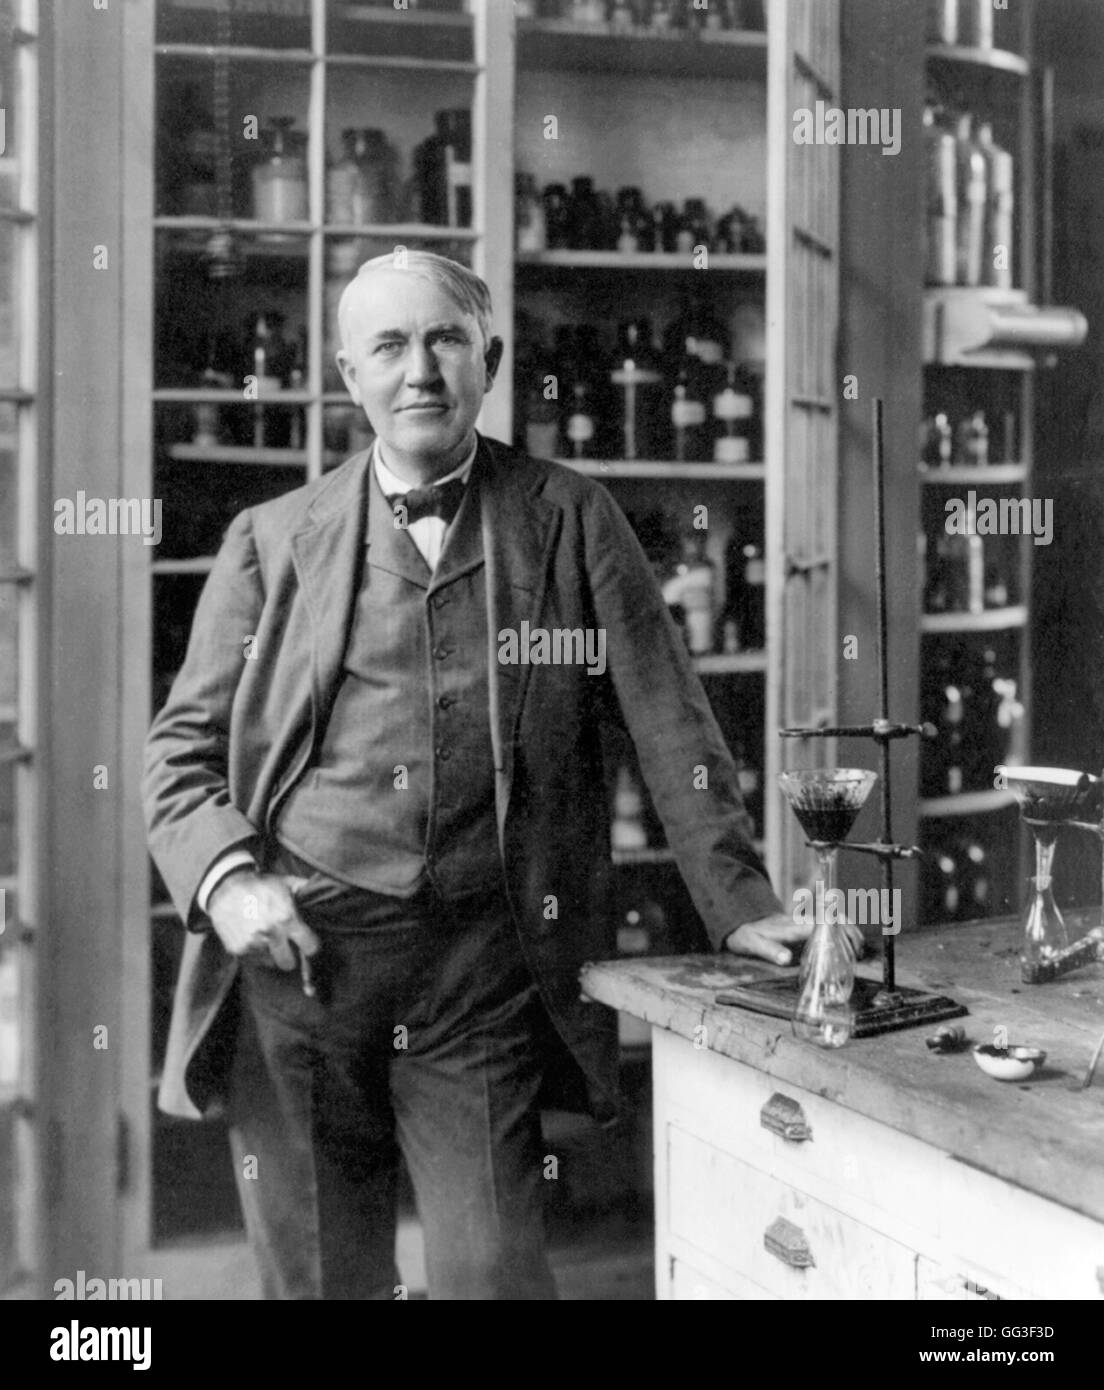 Thomas Edison. Portrait of the American inventor and businessman,Thomas Alva Edison (1847-1931), in his laboratory. Portrait c.1904. Stock Photo